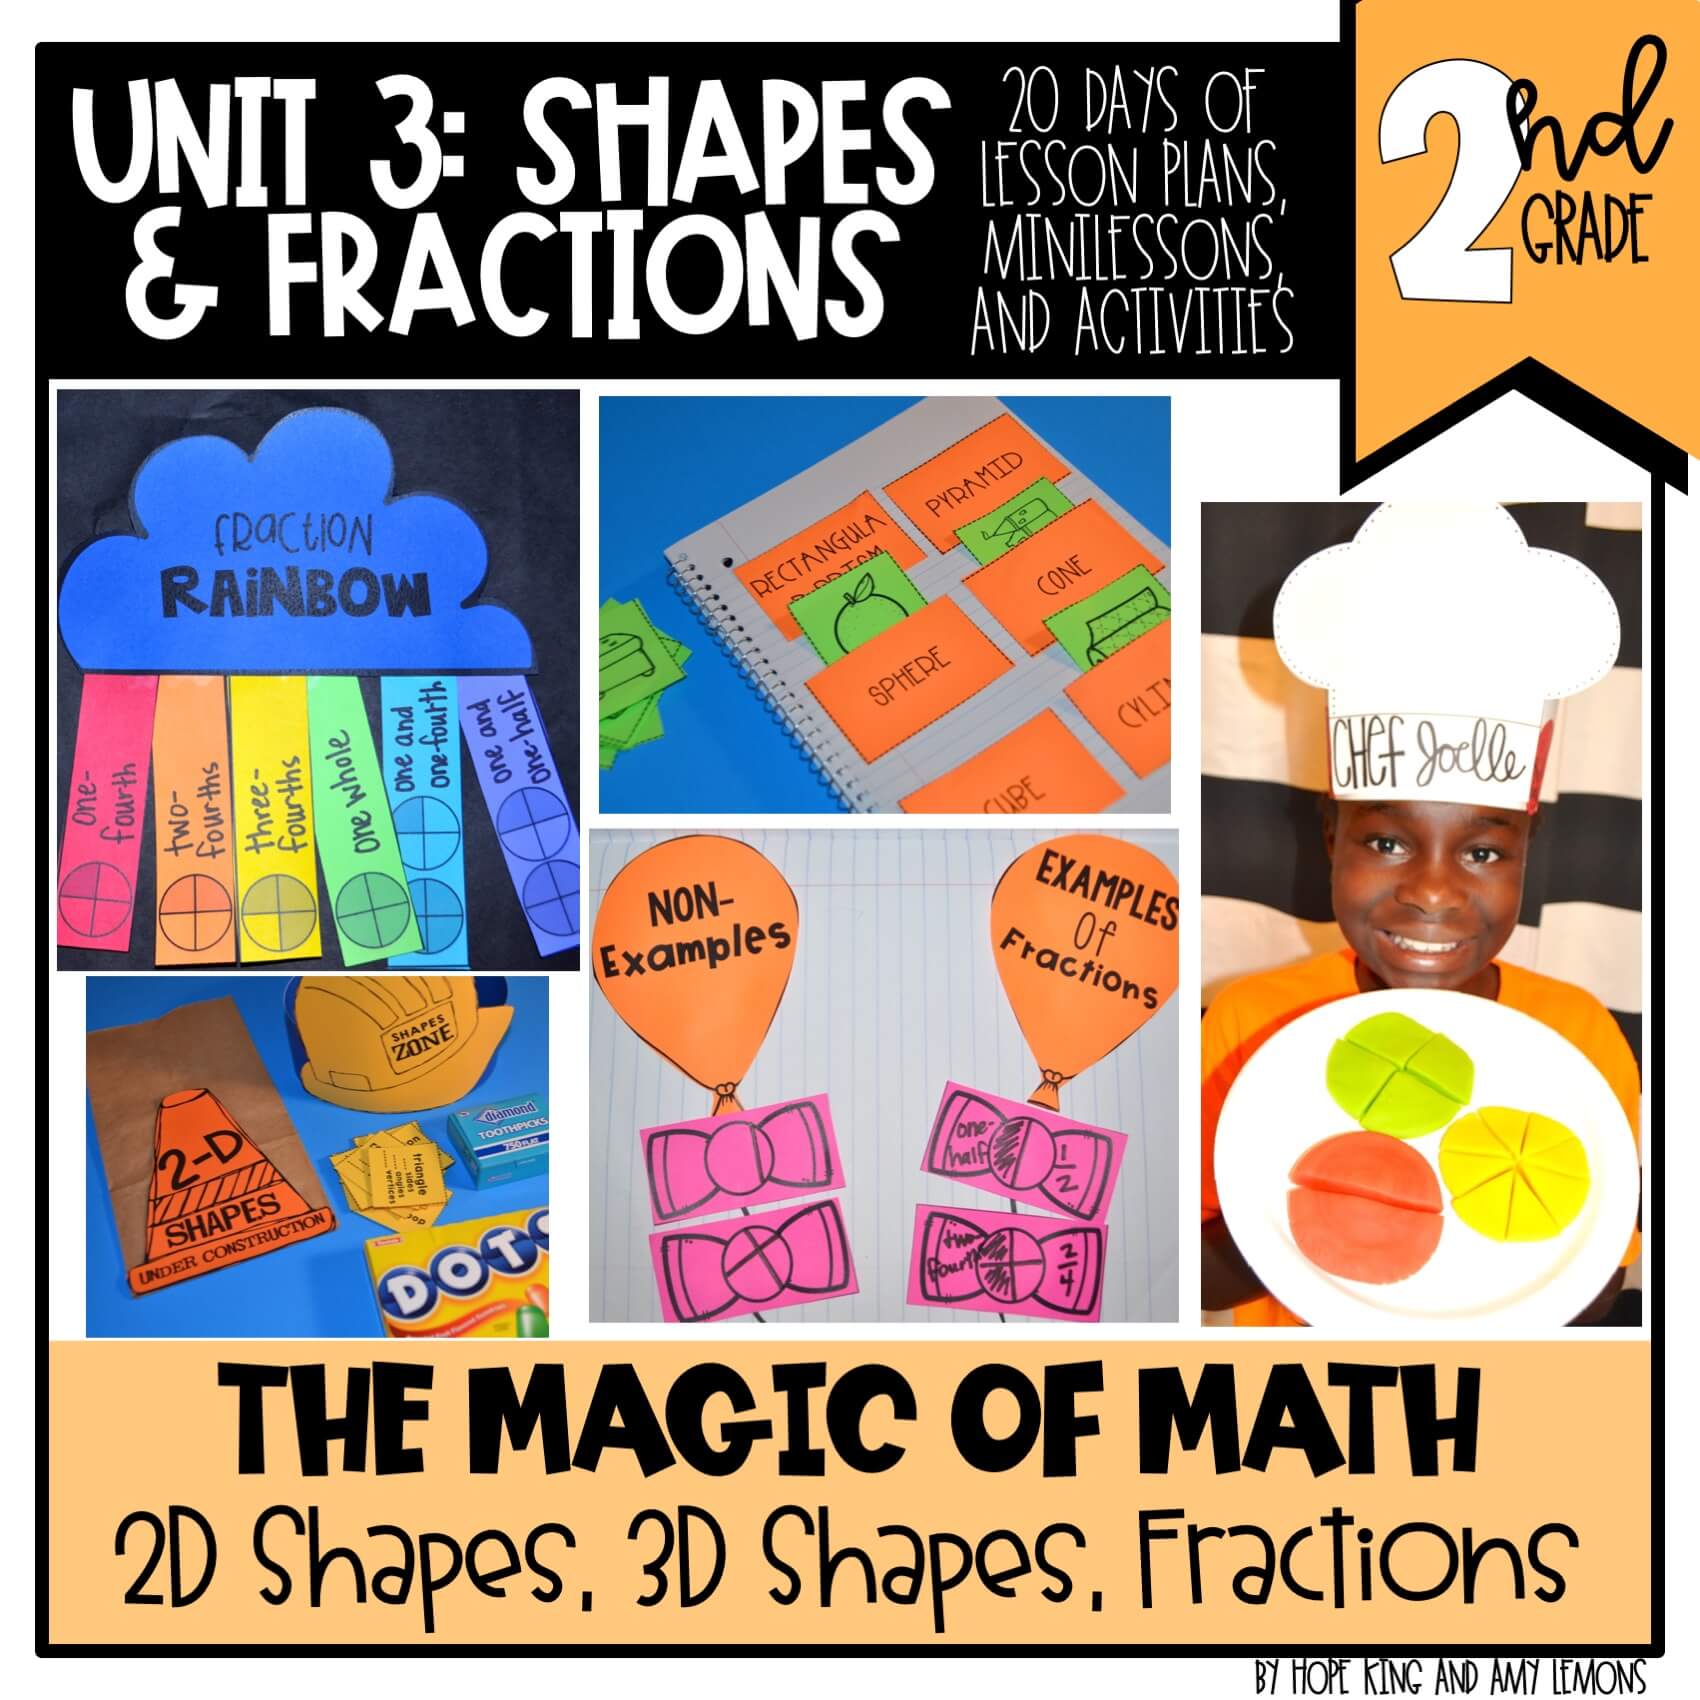 2nd Grade Magic of Math Unit 3